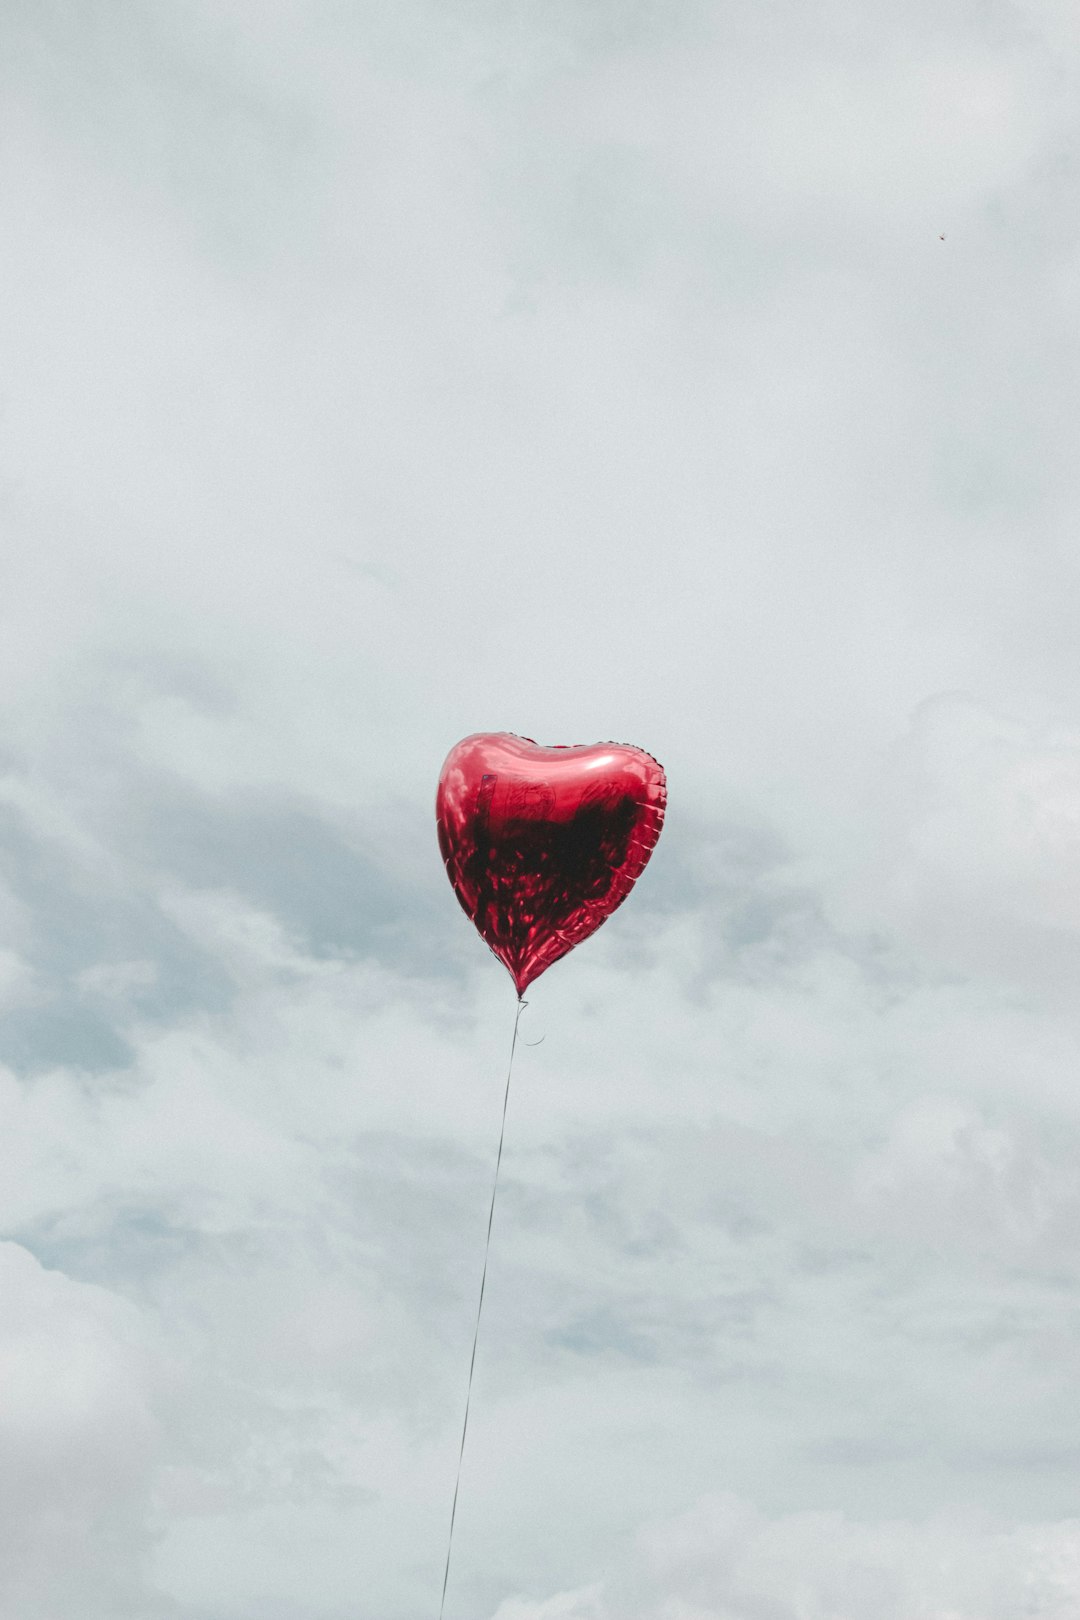 red heart balloon under cloudy sky